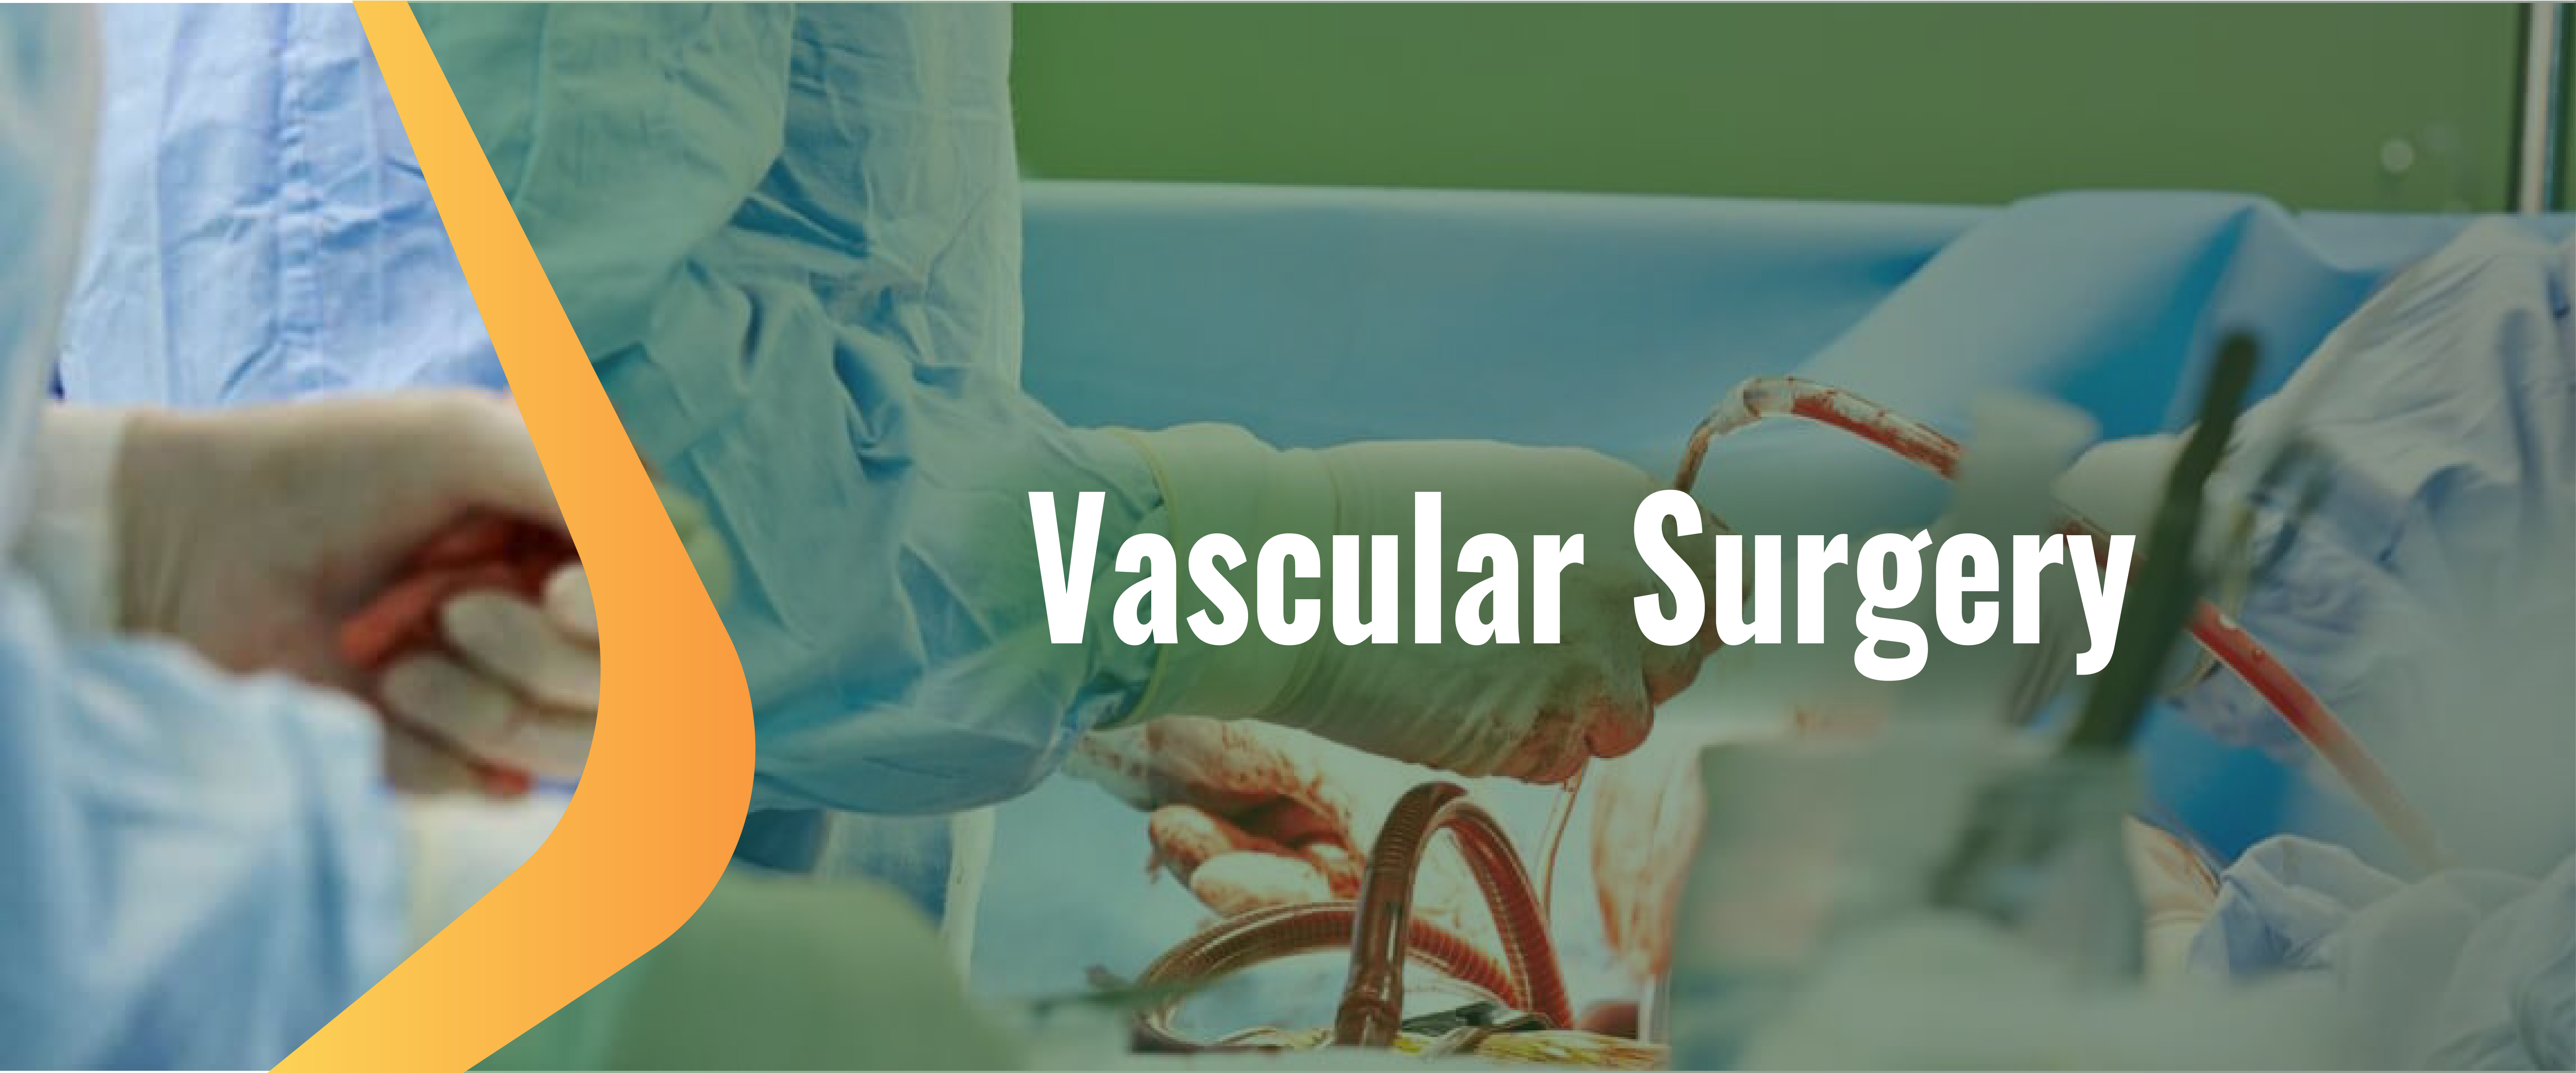 vascular_surgery